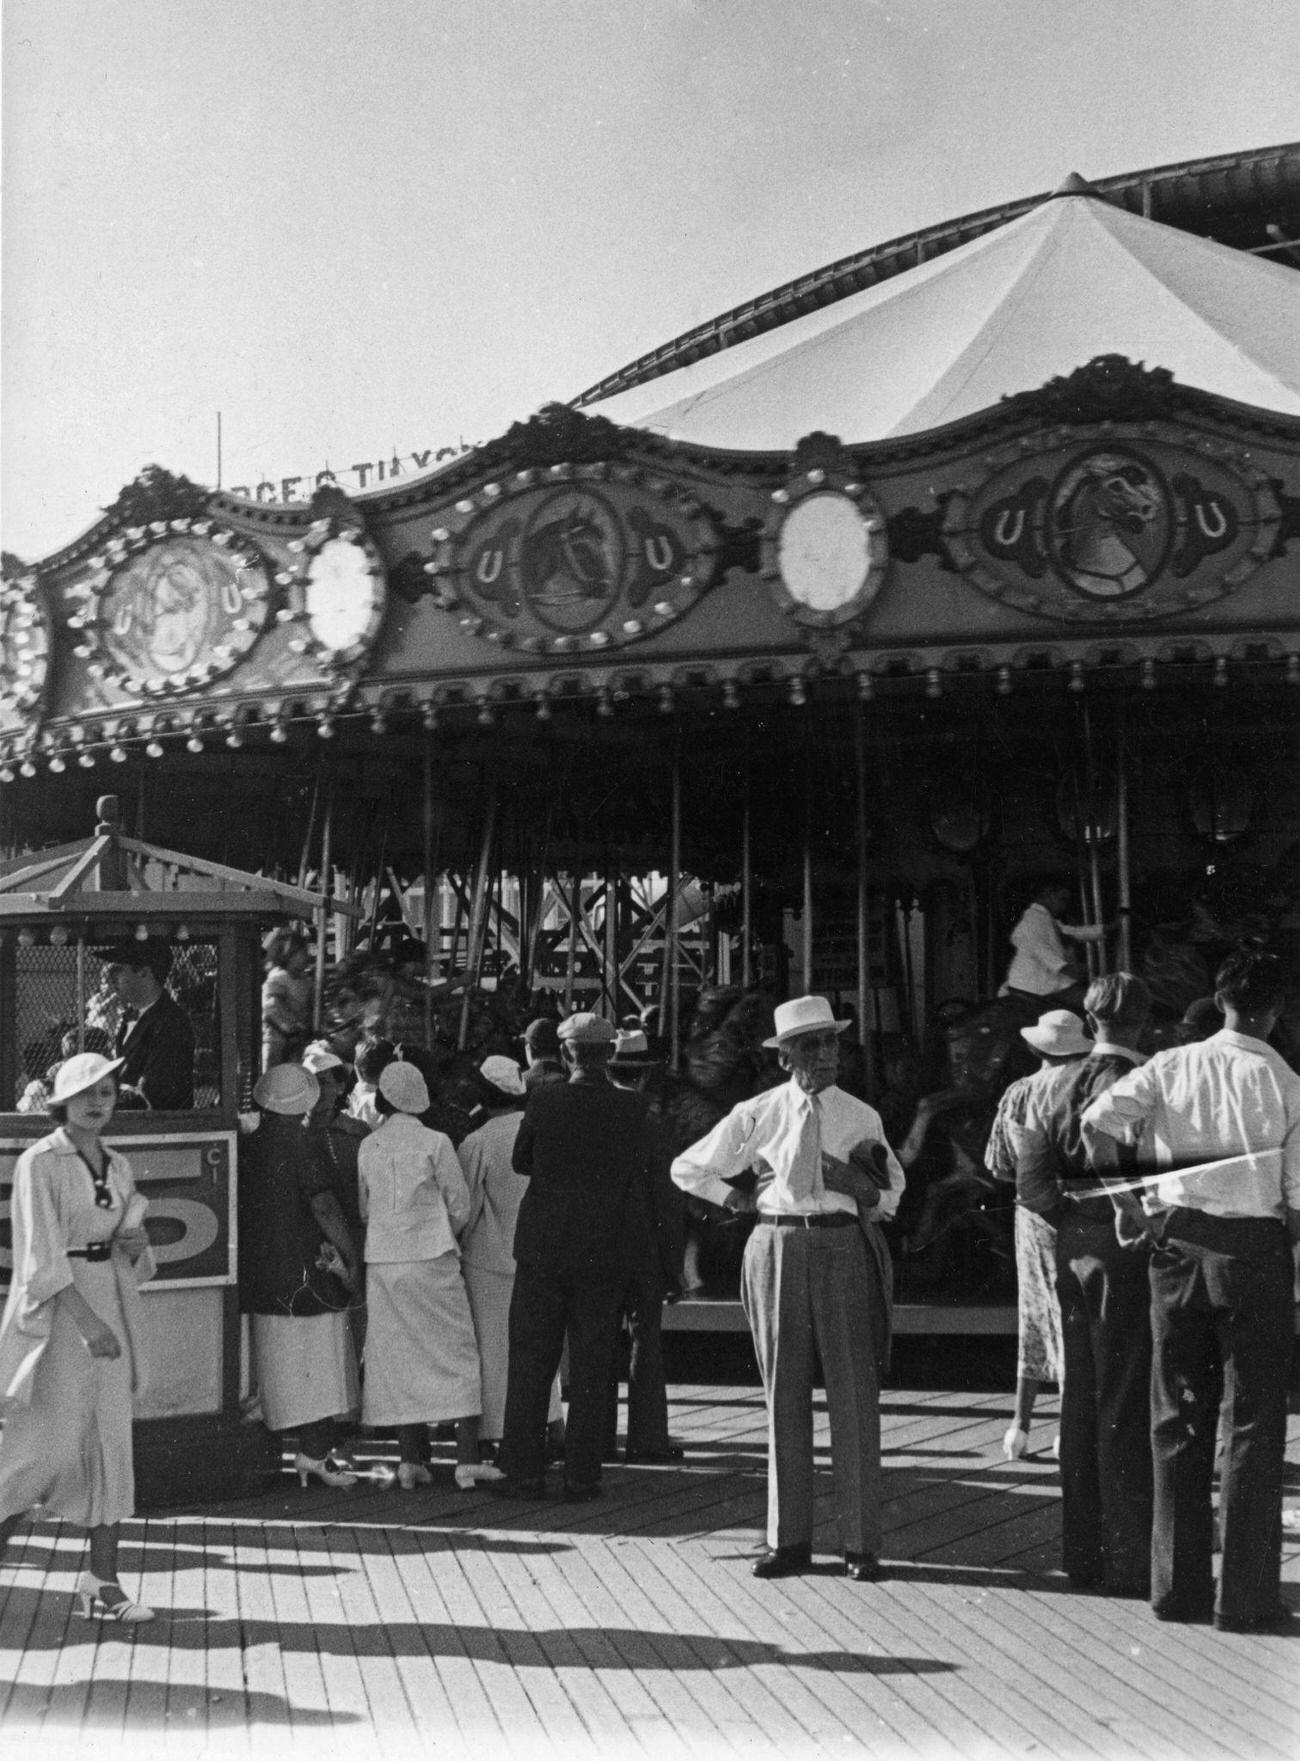 Carousel Ride At Coney Island, 1930